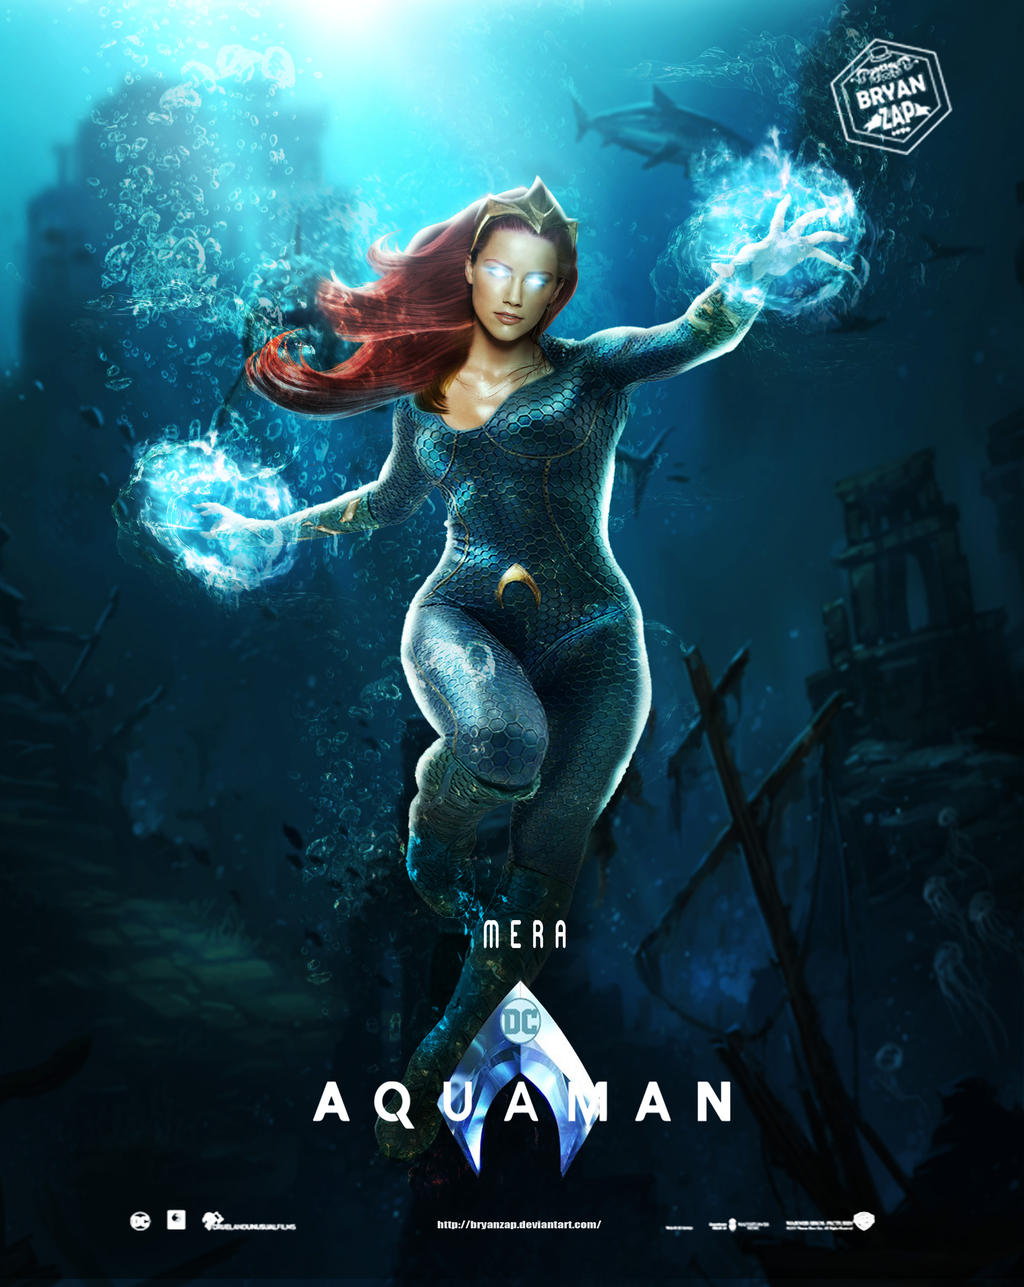 Aquaman Mera Poster By Bryanzap On Deviantart